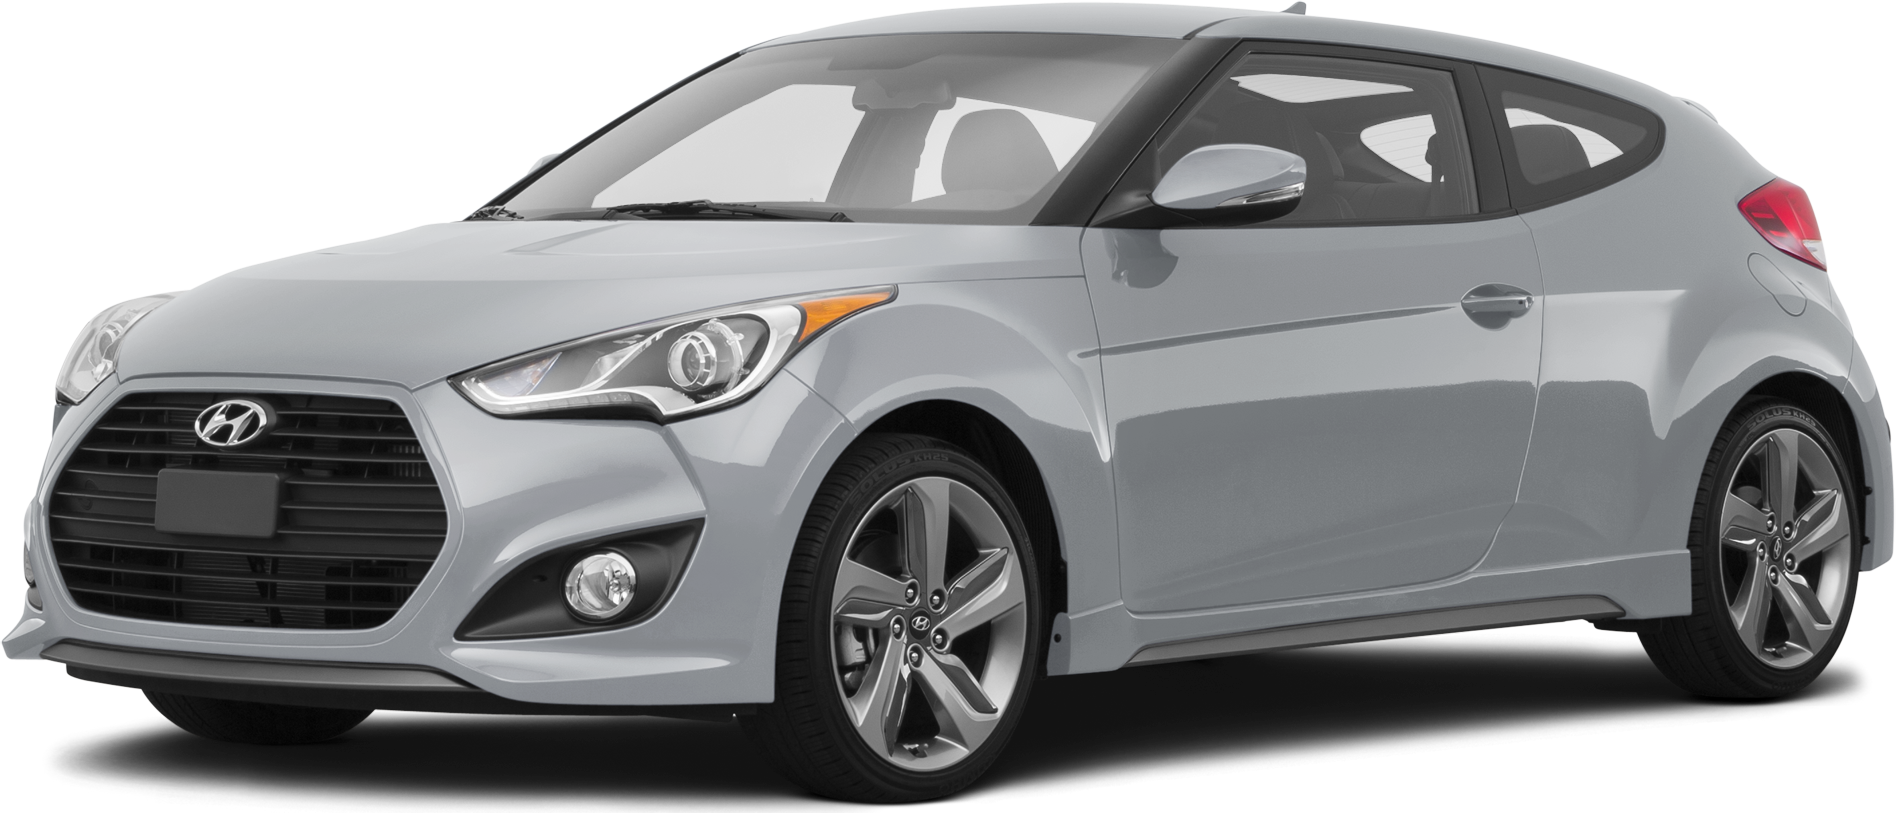 2015 Hyundai Veloster Price, Value, Ratings & Reviews | Kelley Blue Book